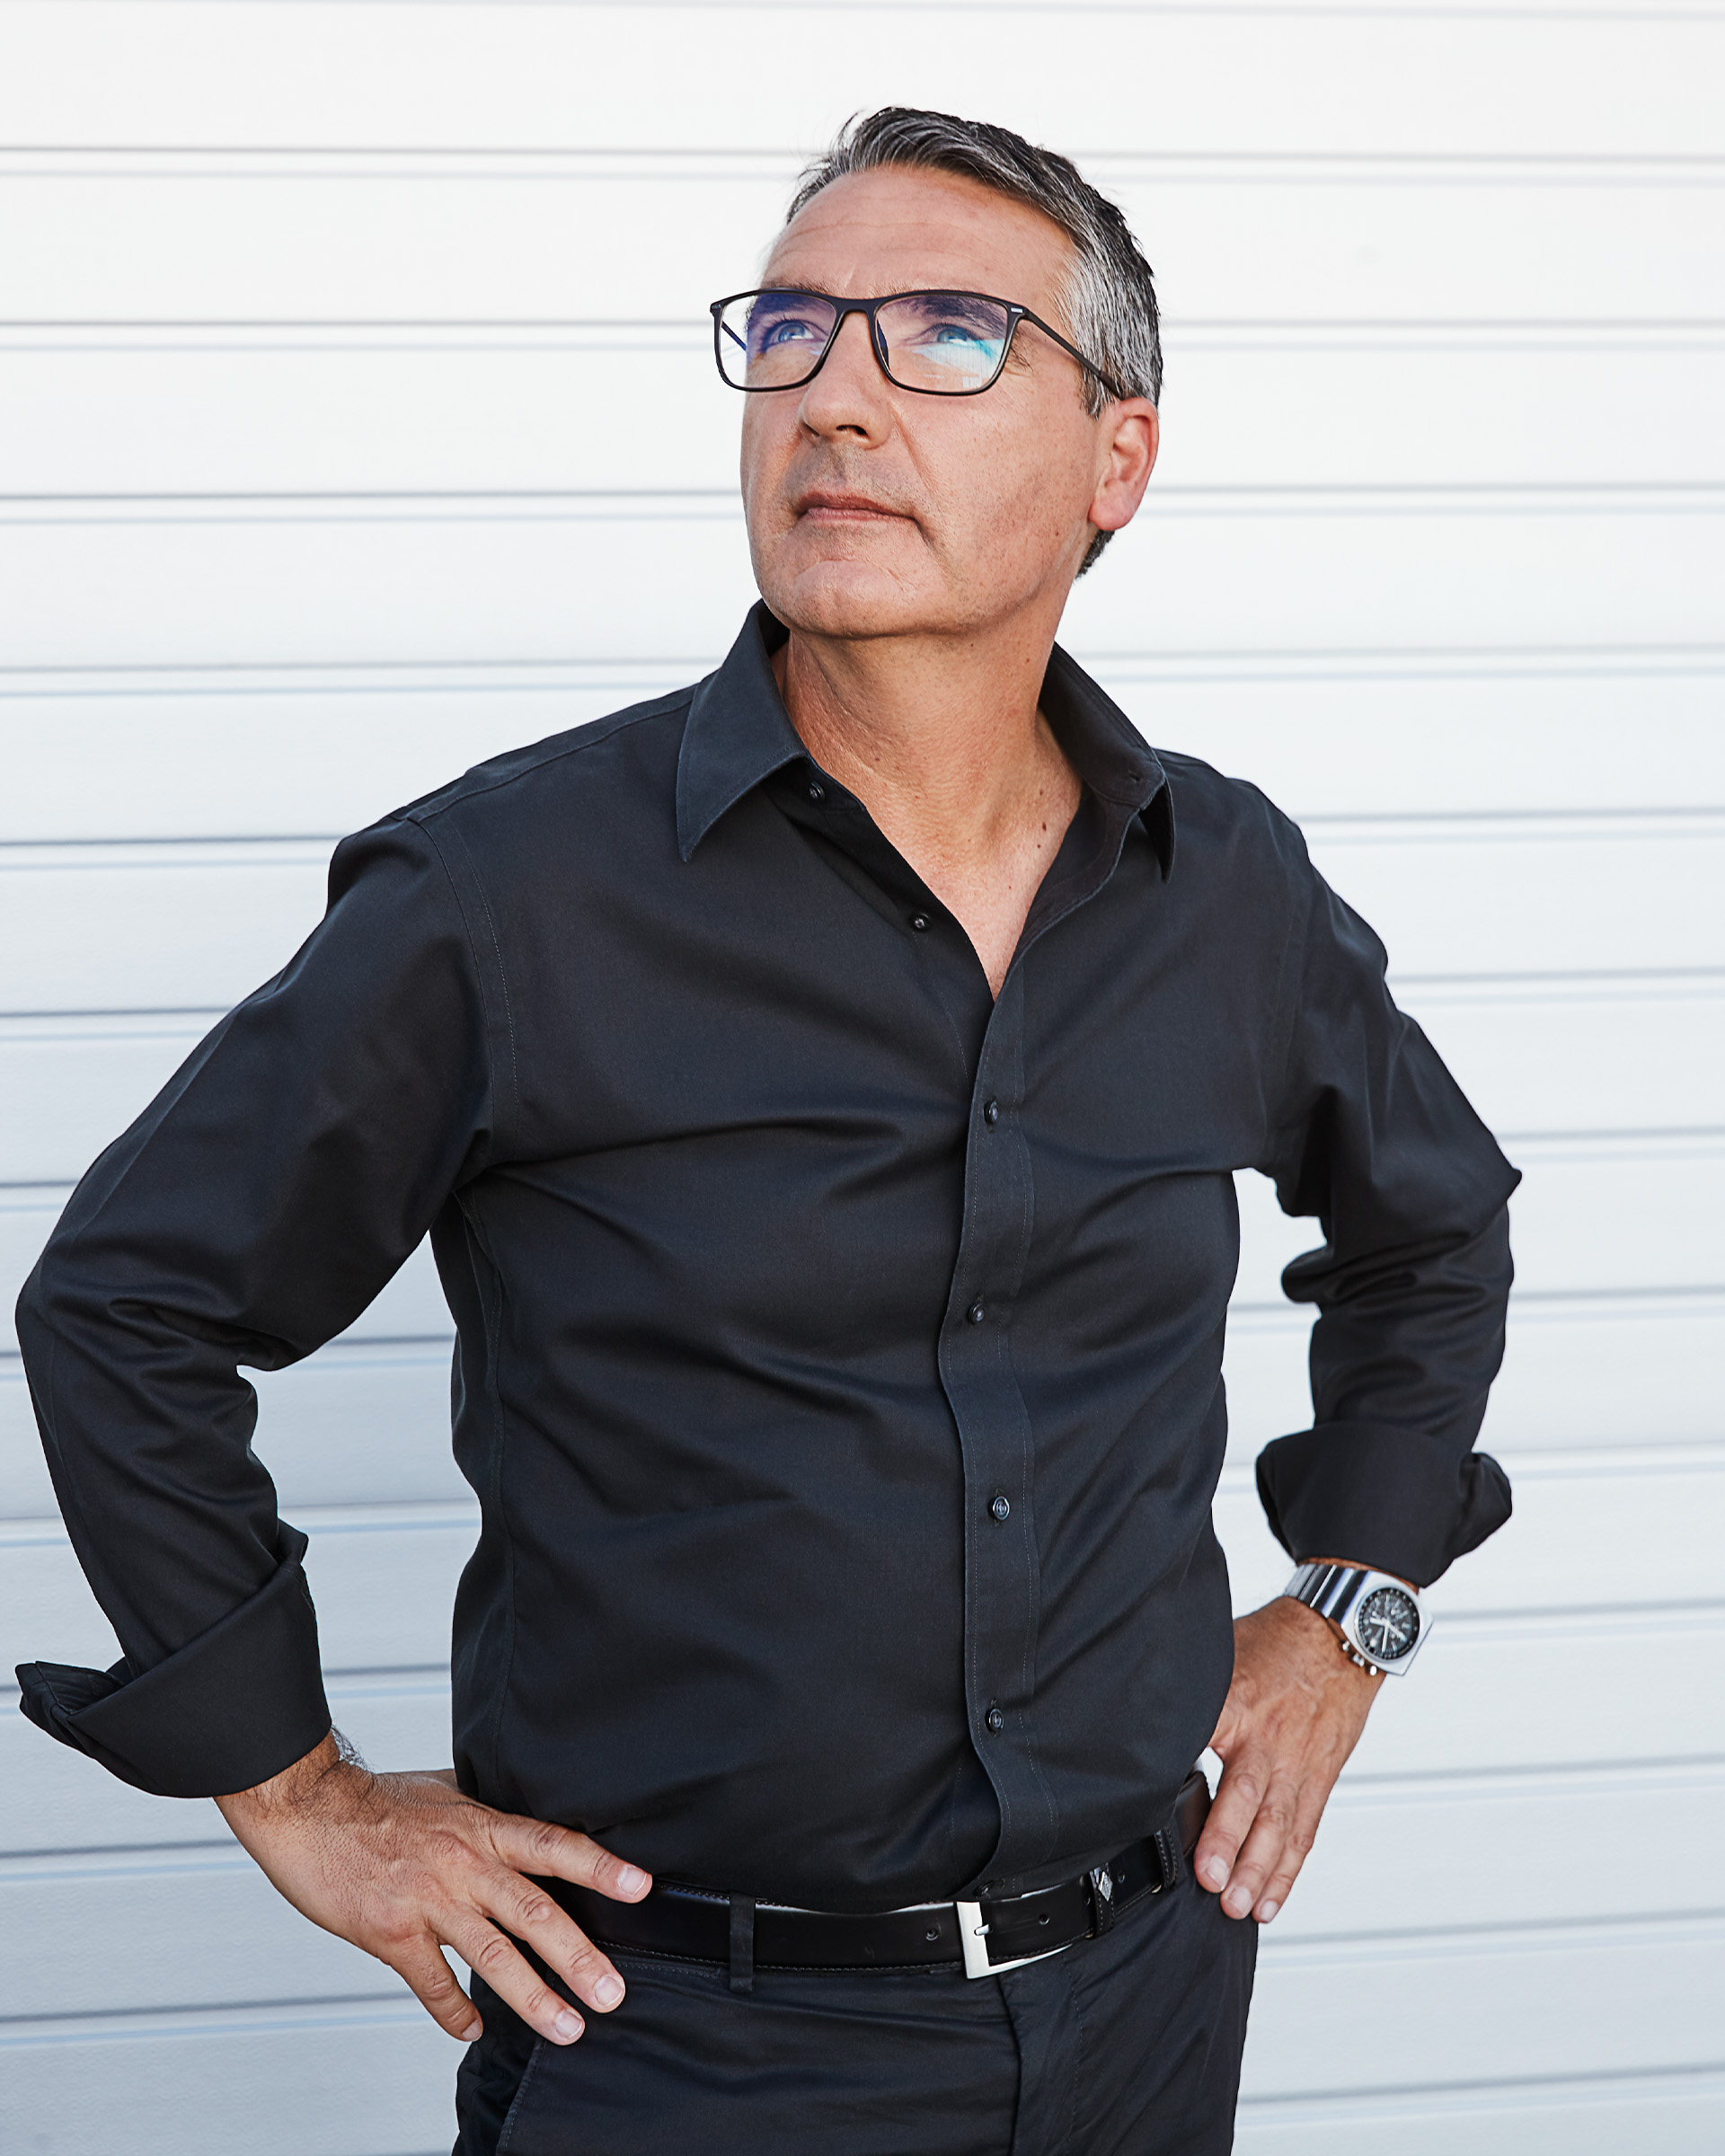 César Muntada, head of Audi light design